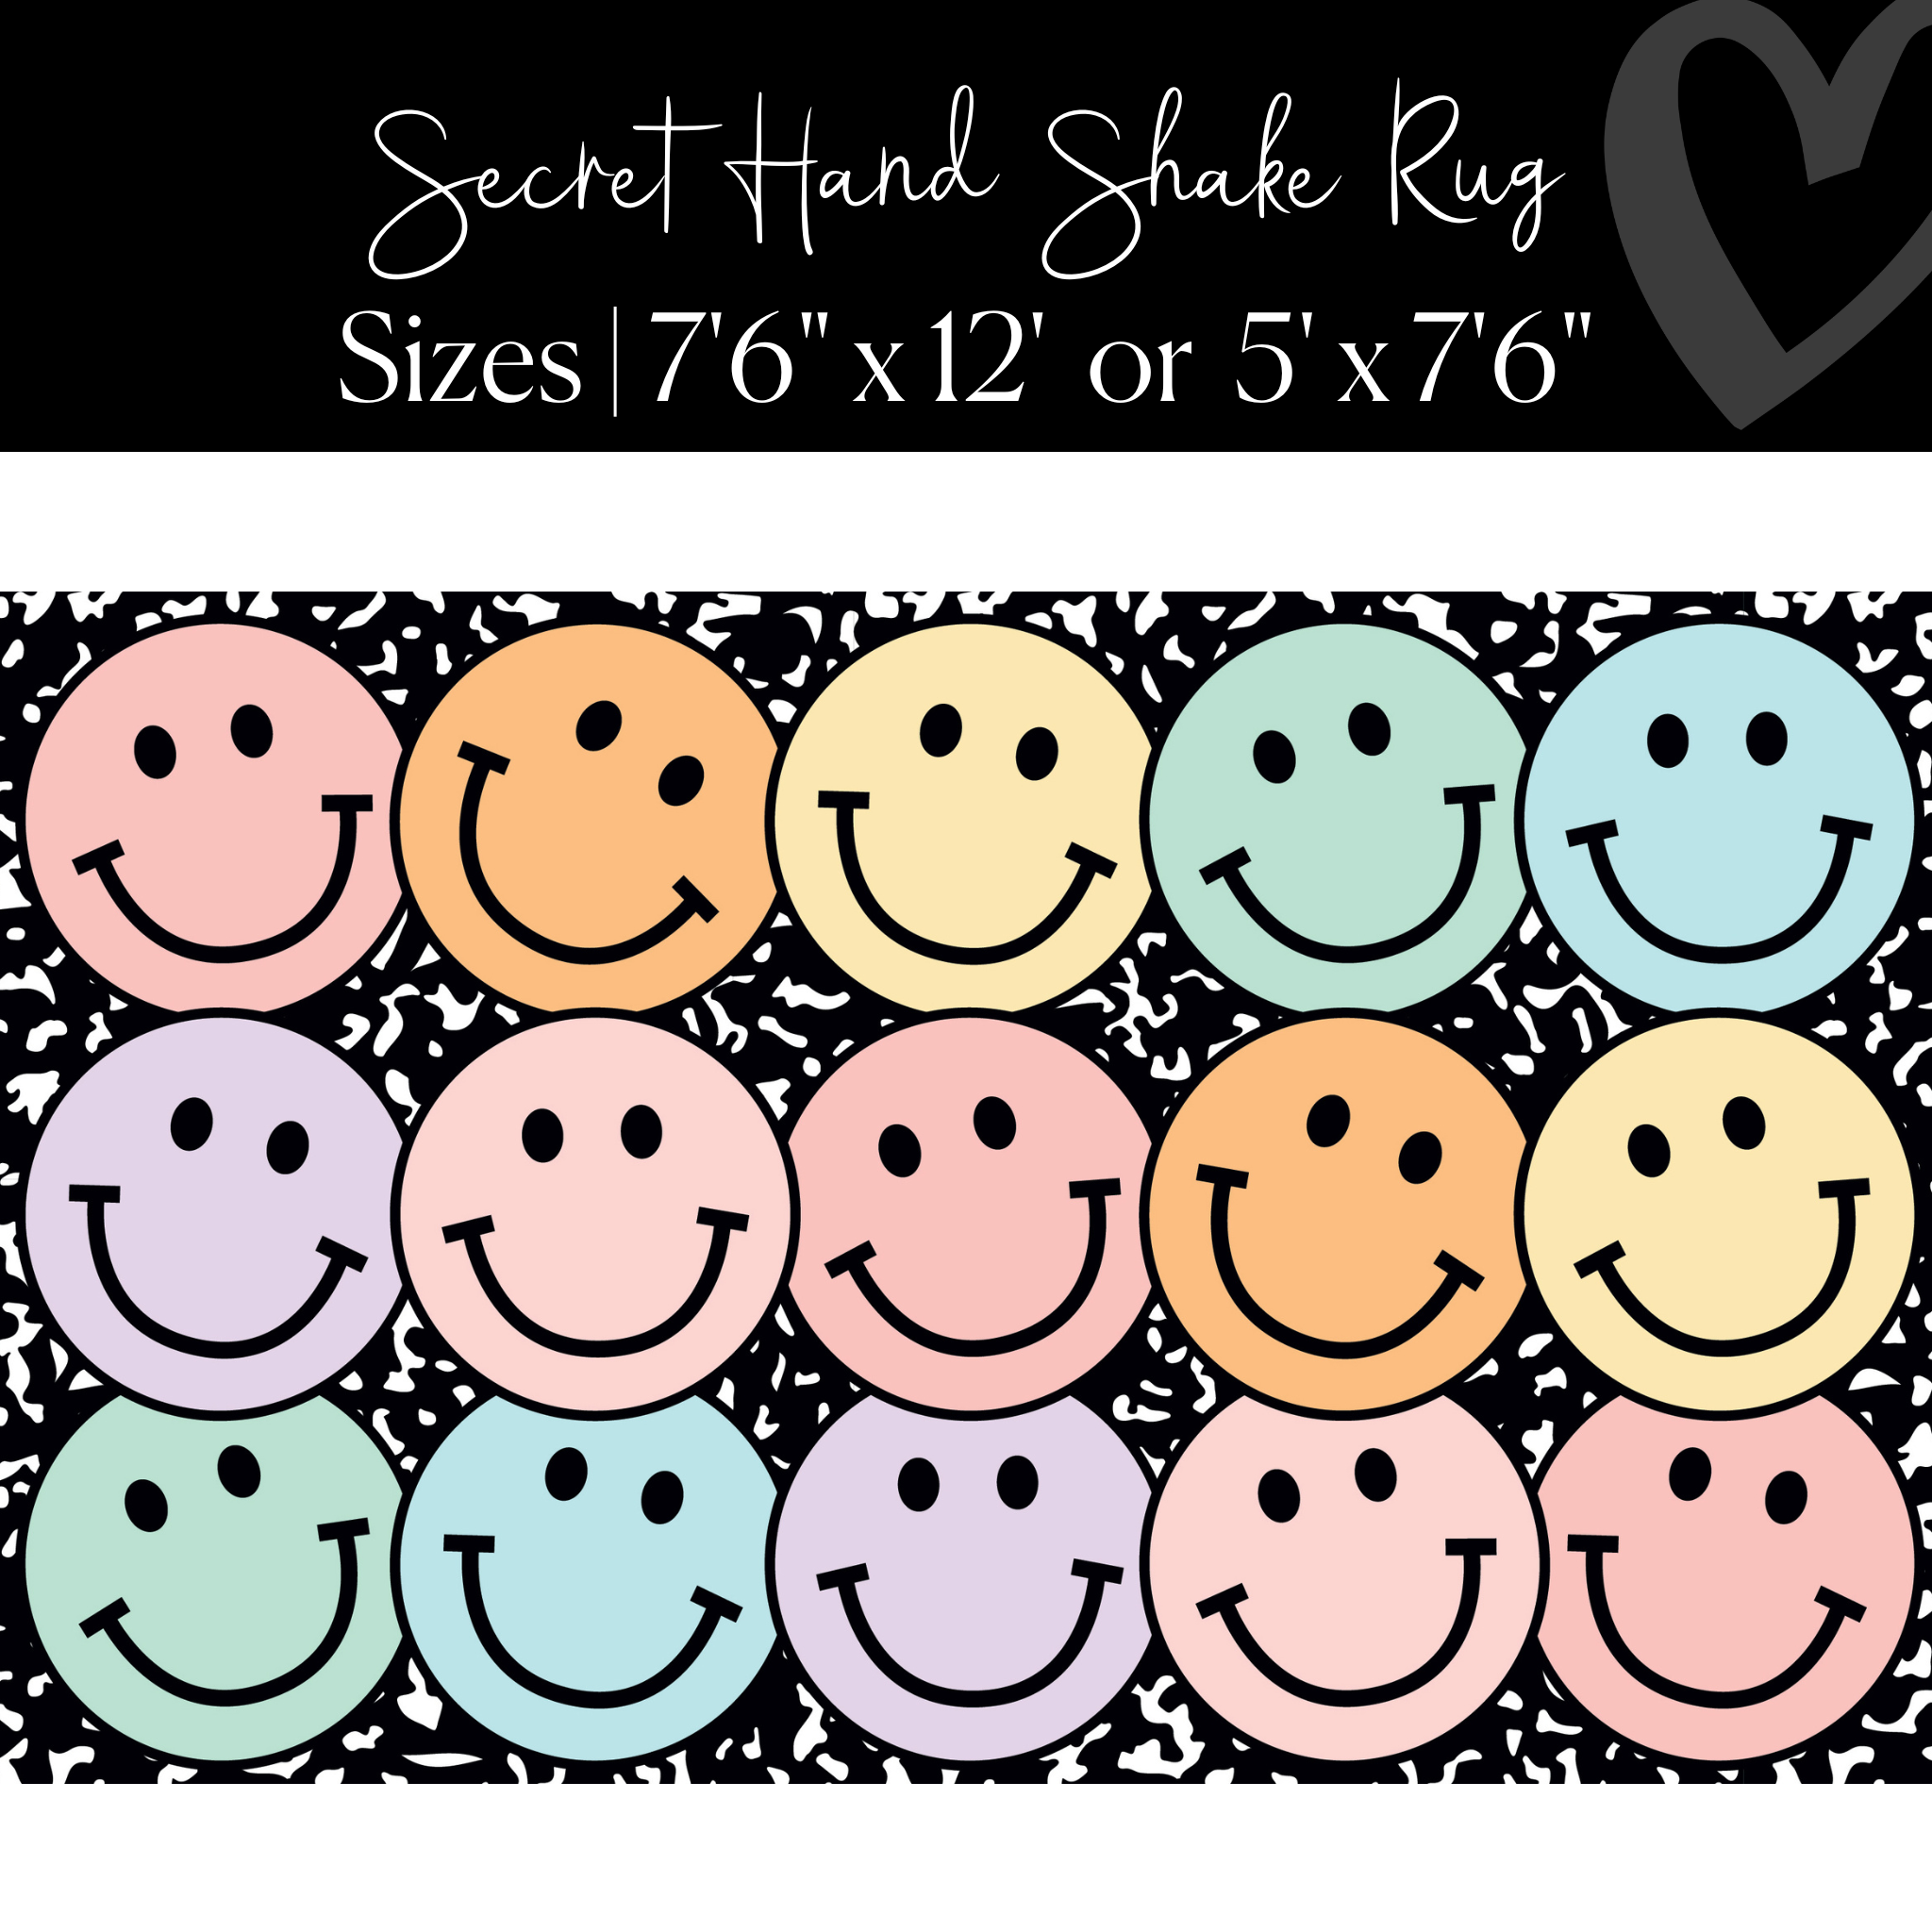 Pastel Rainbow Smileys on Notebook Rug | Pastel Classroom Rug | Secret Hand Shake | Schoolgirl Style